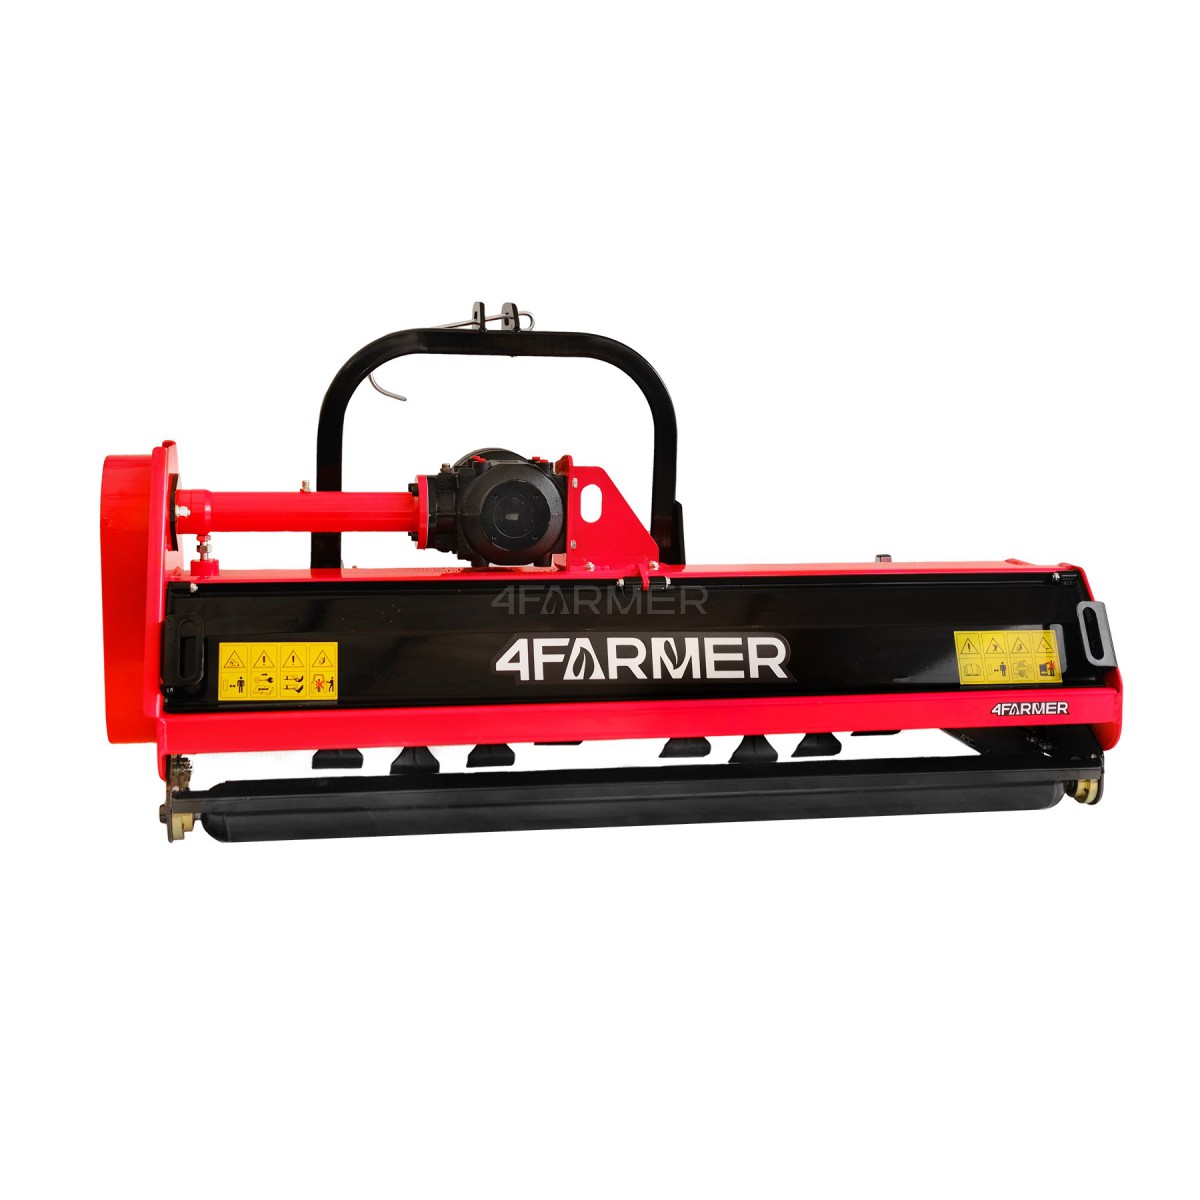 EFGC 165D 4FARMER flail mower - red